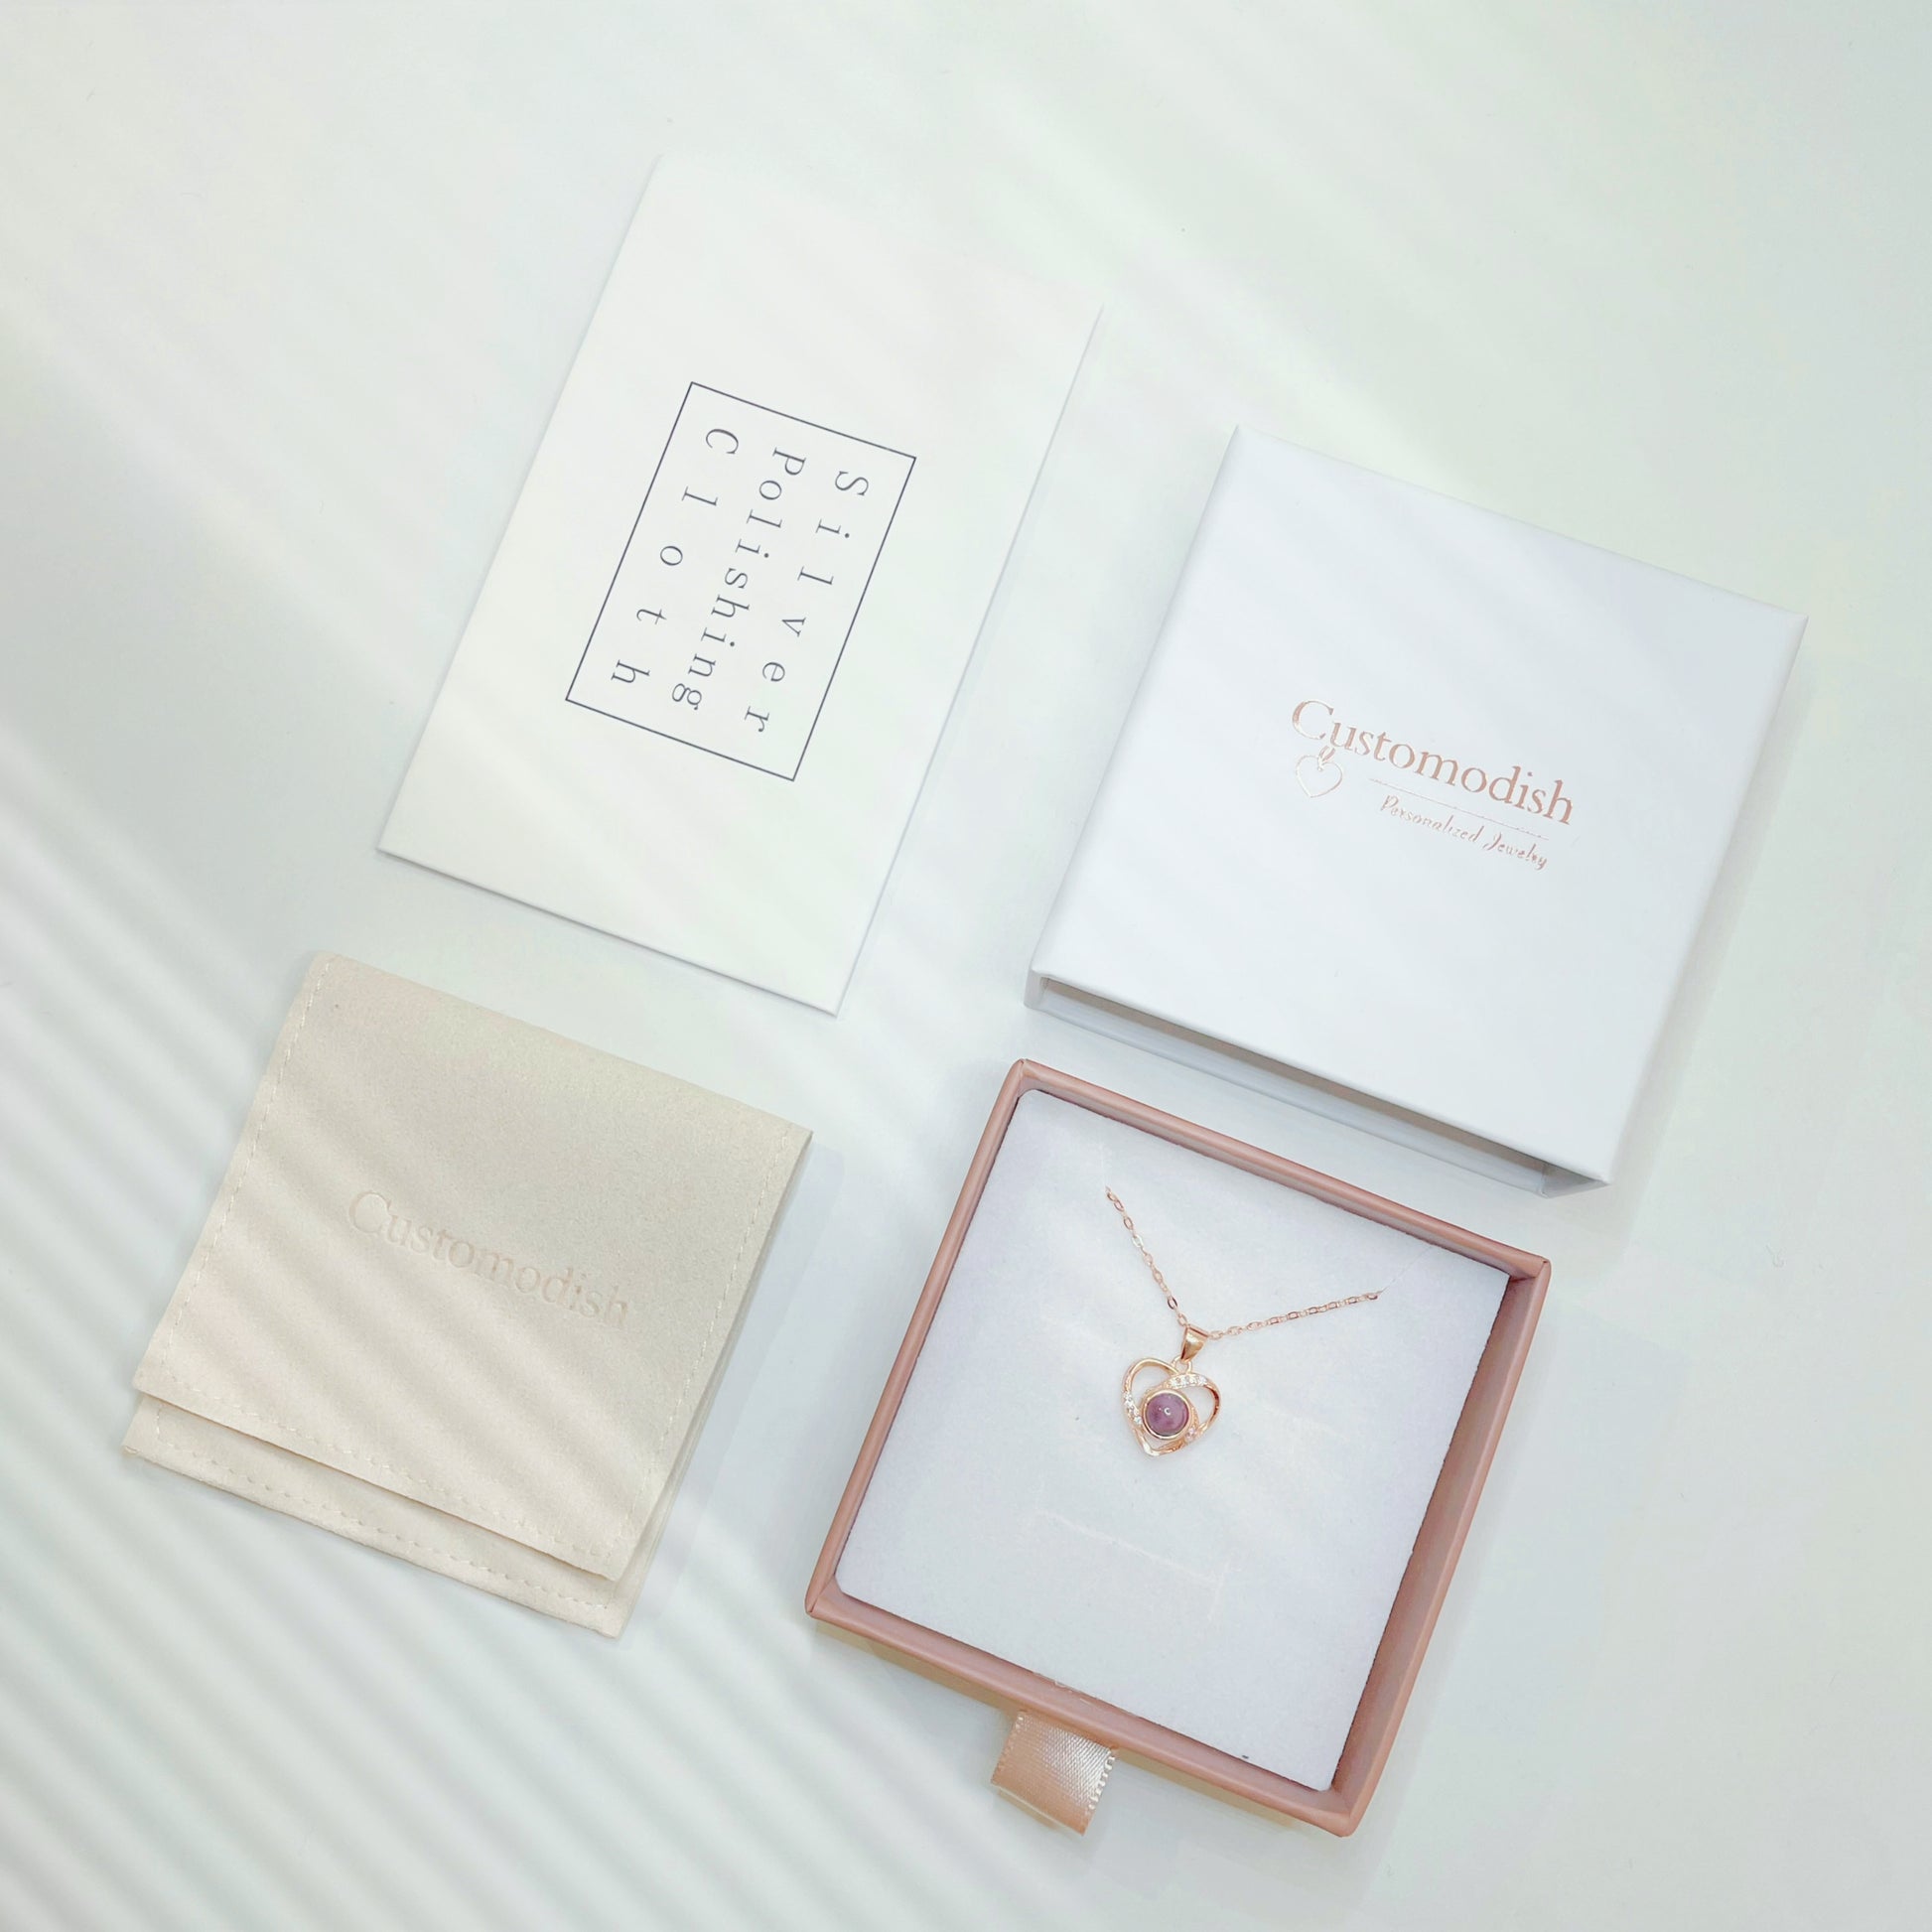  Customodish jewelry packaging